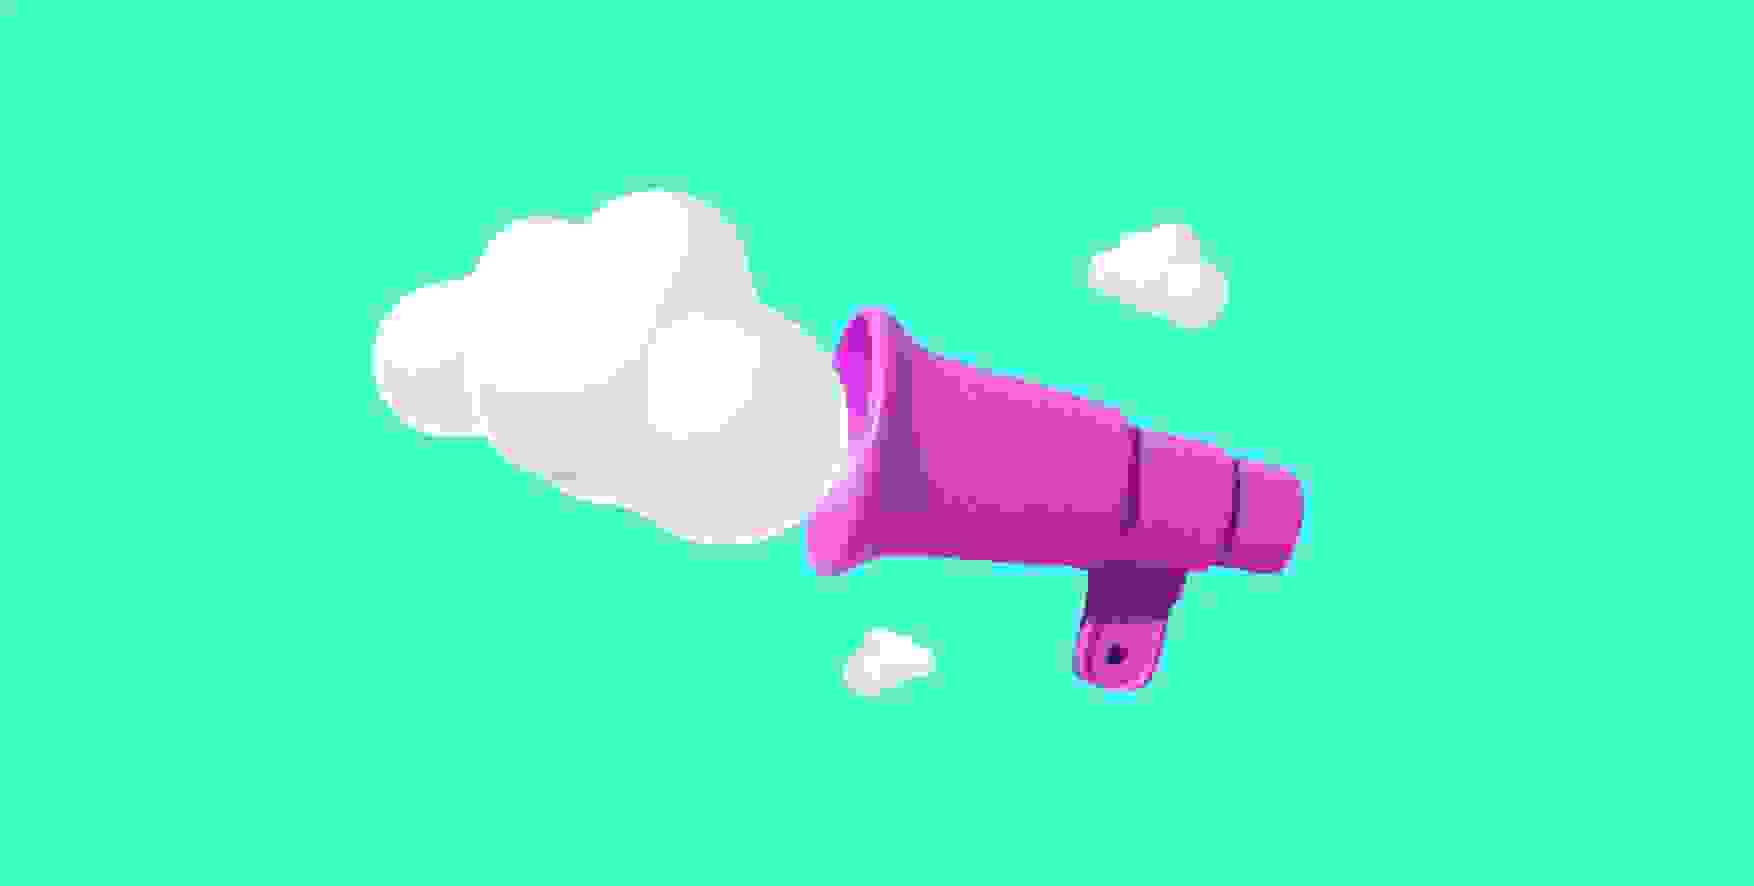 a cloud flies out of a megaphone